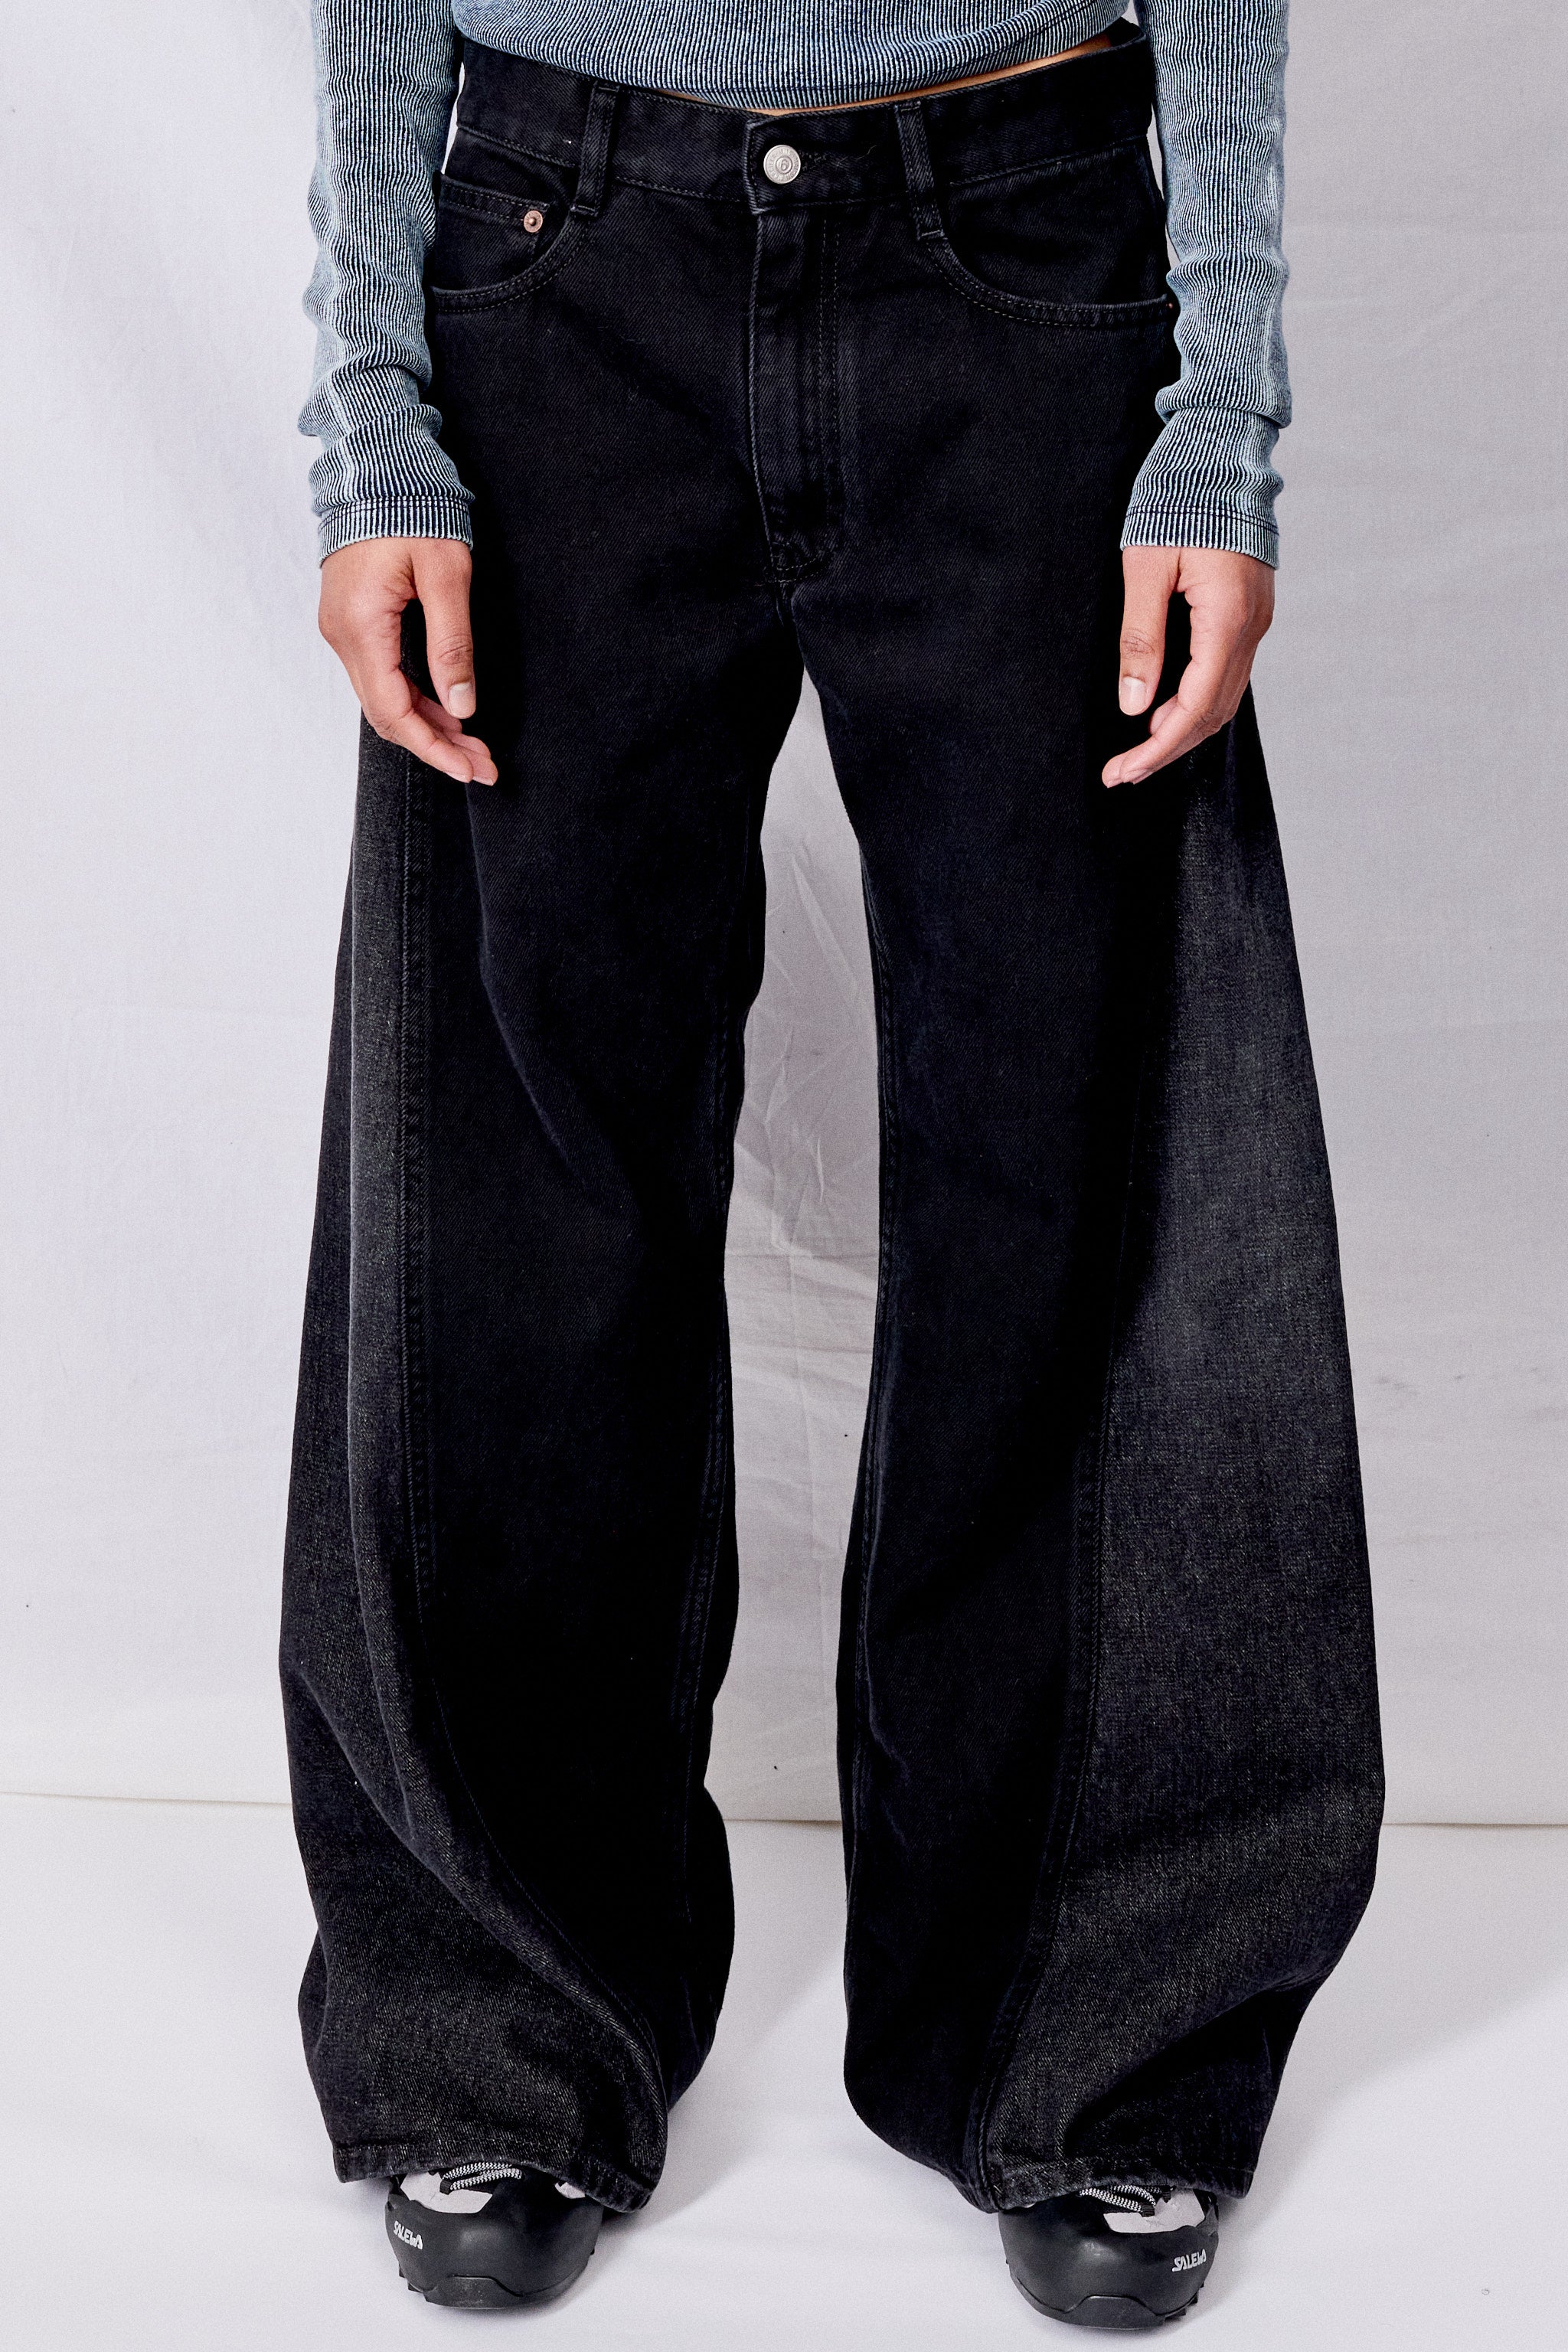 Grey/Black Oversized Jeans